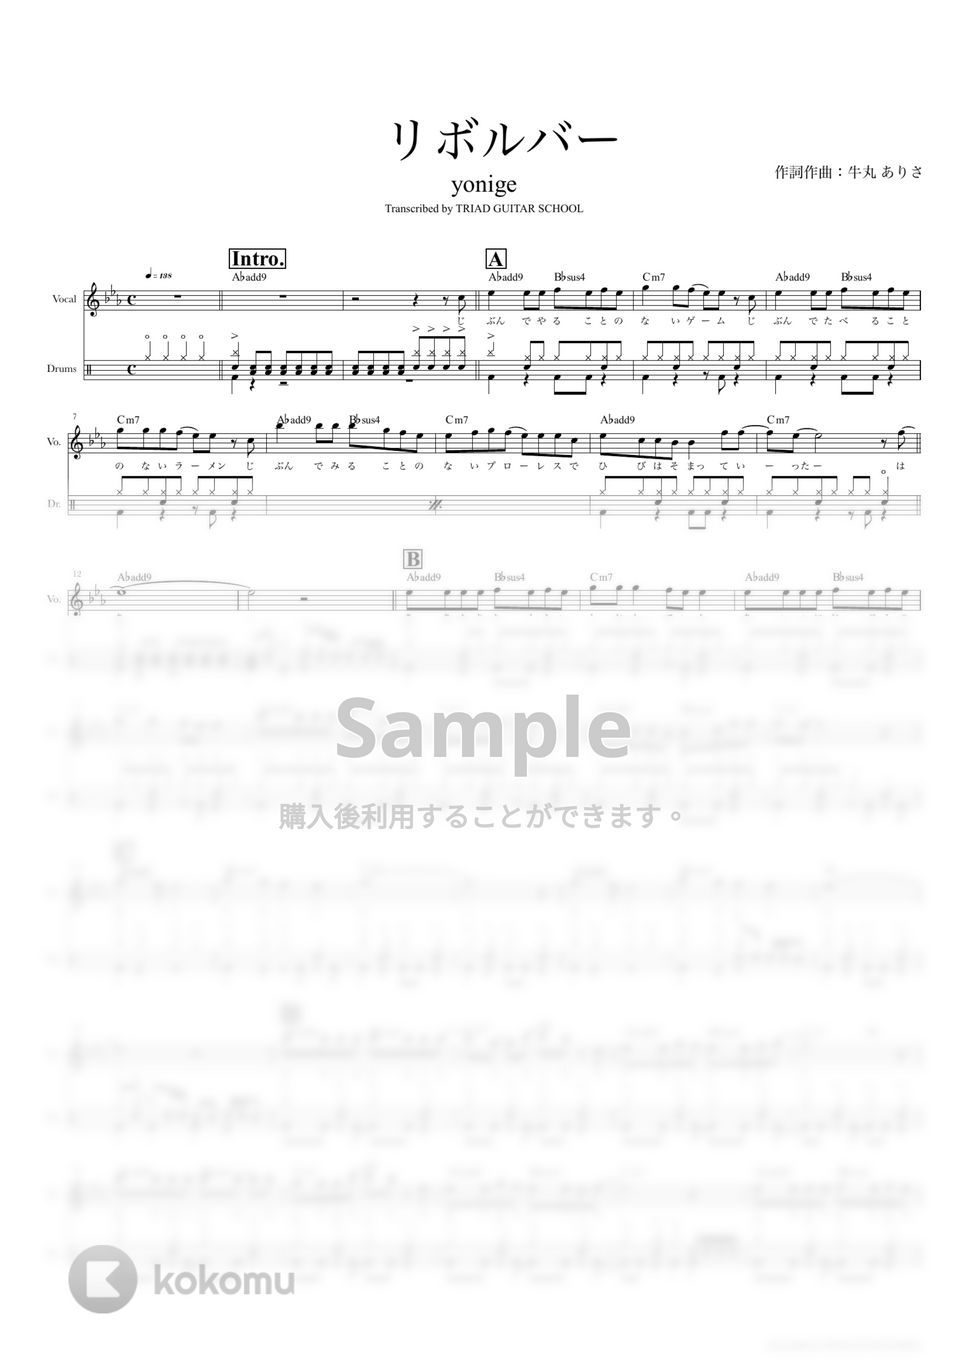 yonige - リボルバー (ドラムスコア・歌詞・コード付き) by TRIAD GUITAR SCHOOL